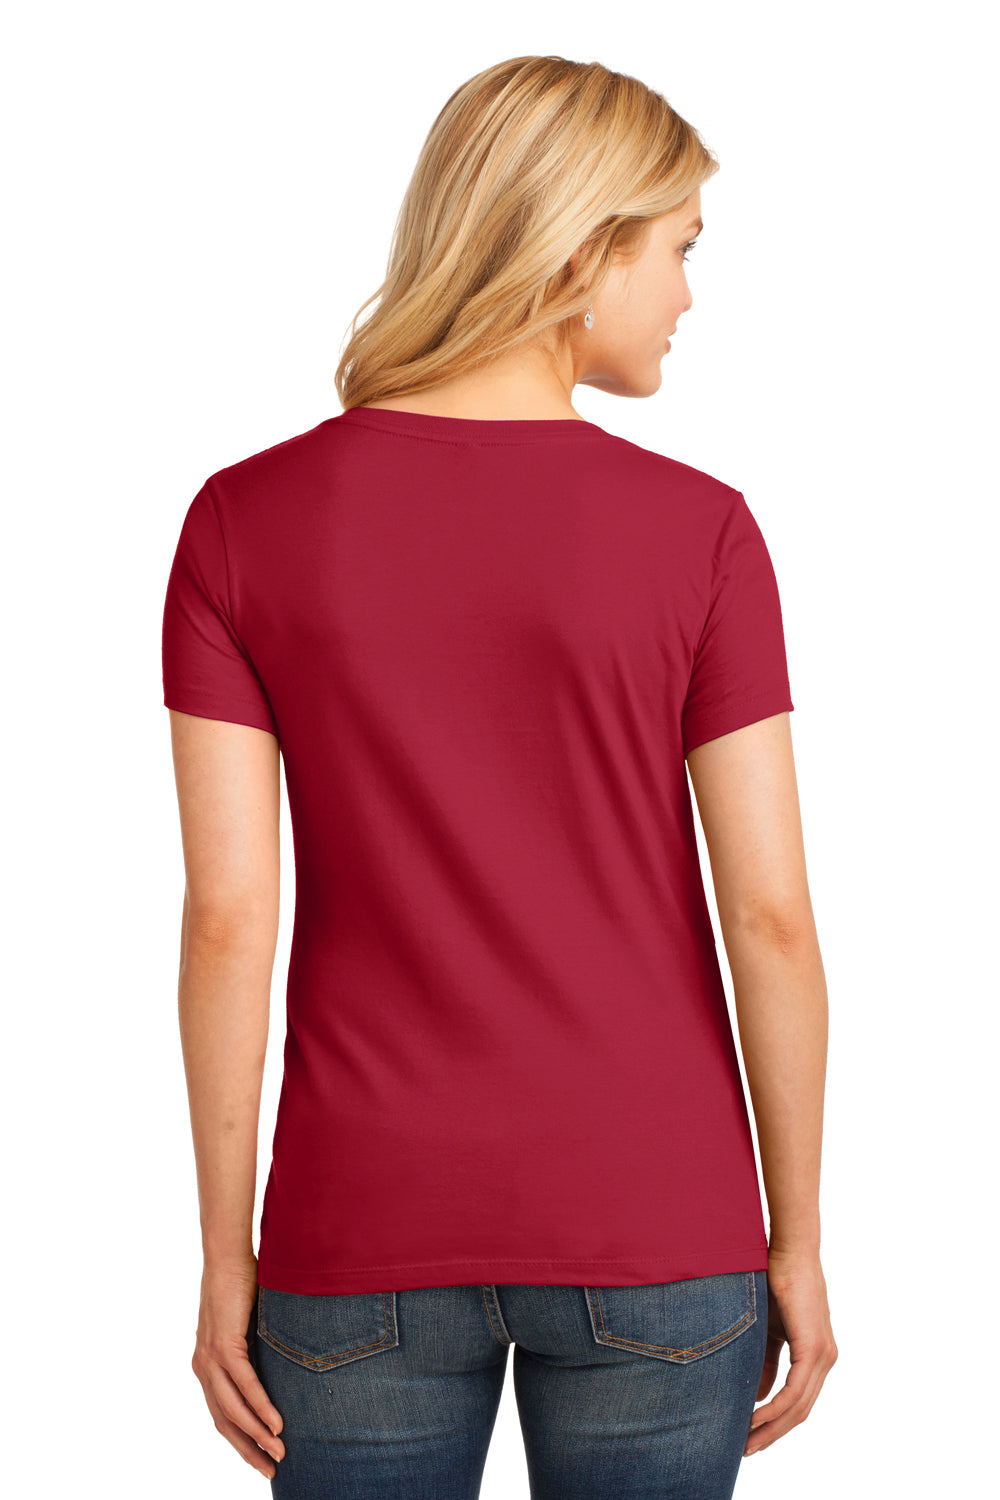 Port & Company LPC54V Womens Core Short Sleeve V-Neck T-Shirt Red Back